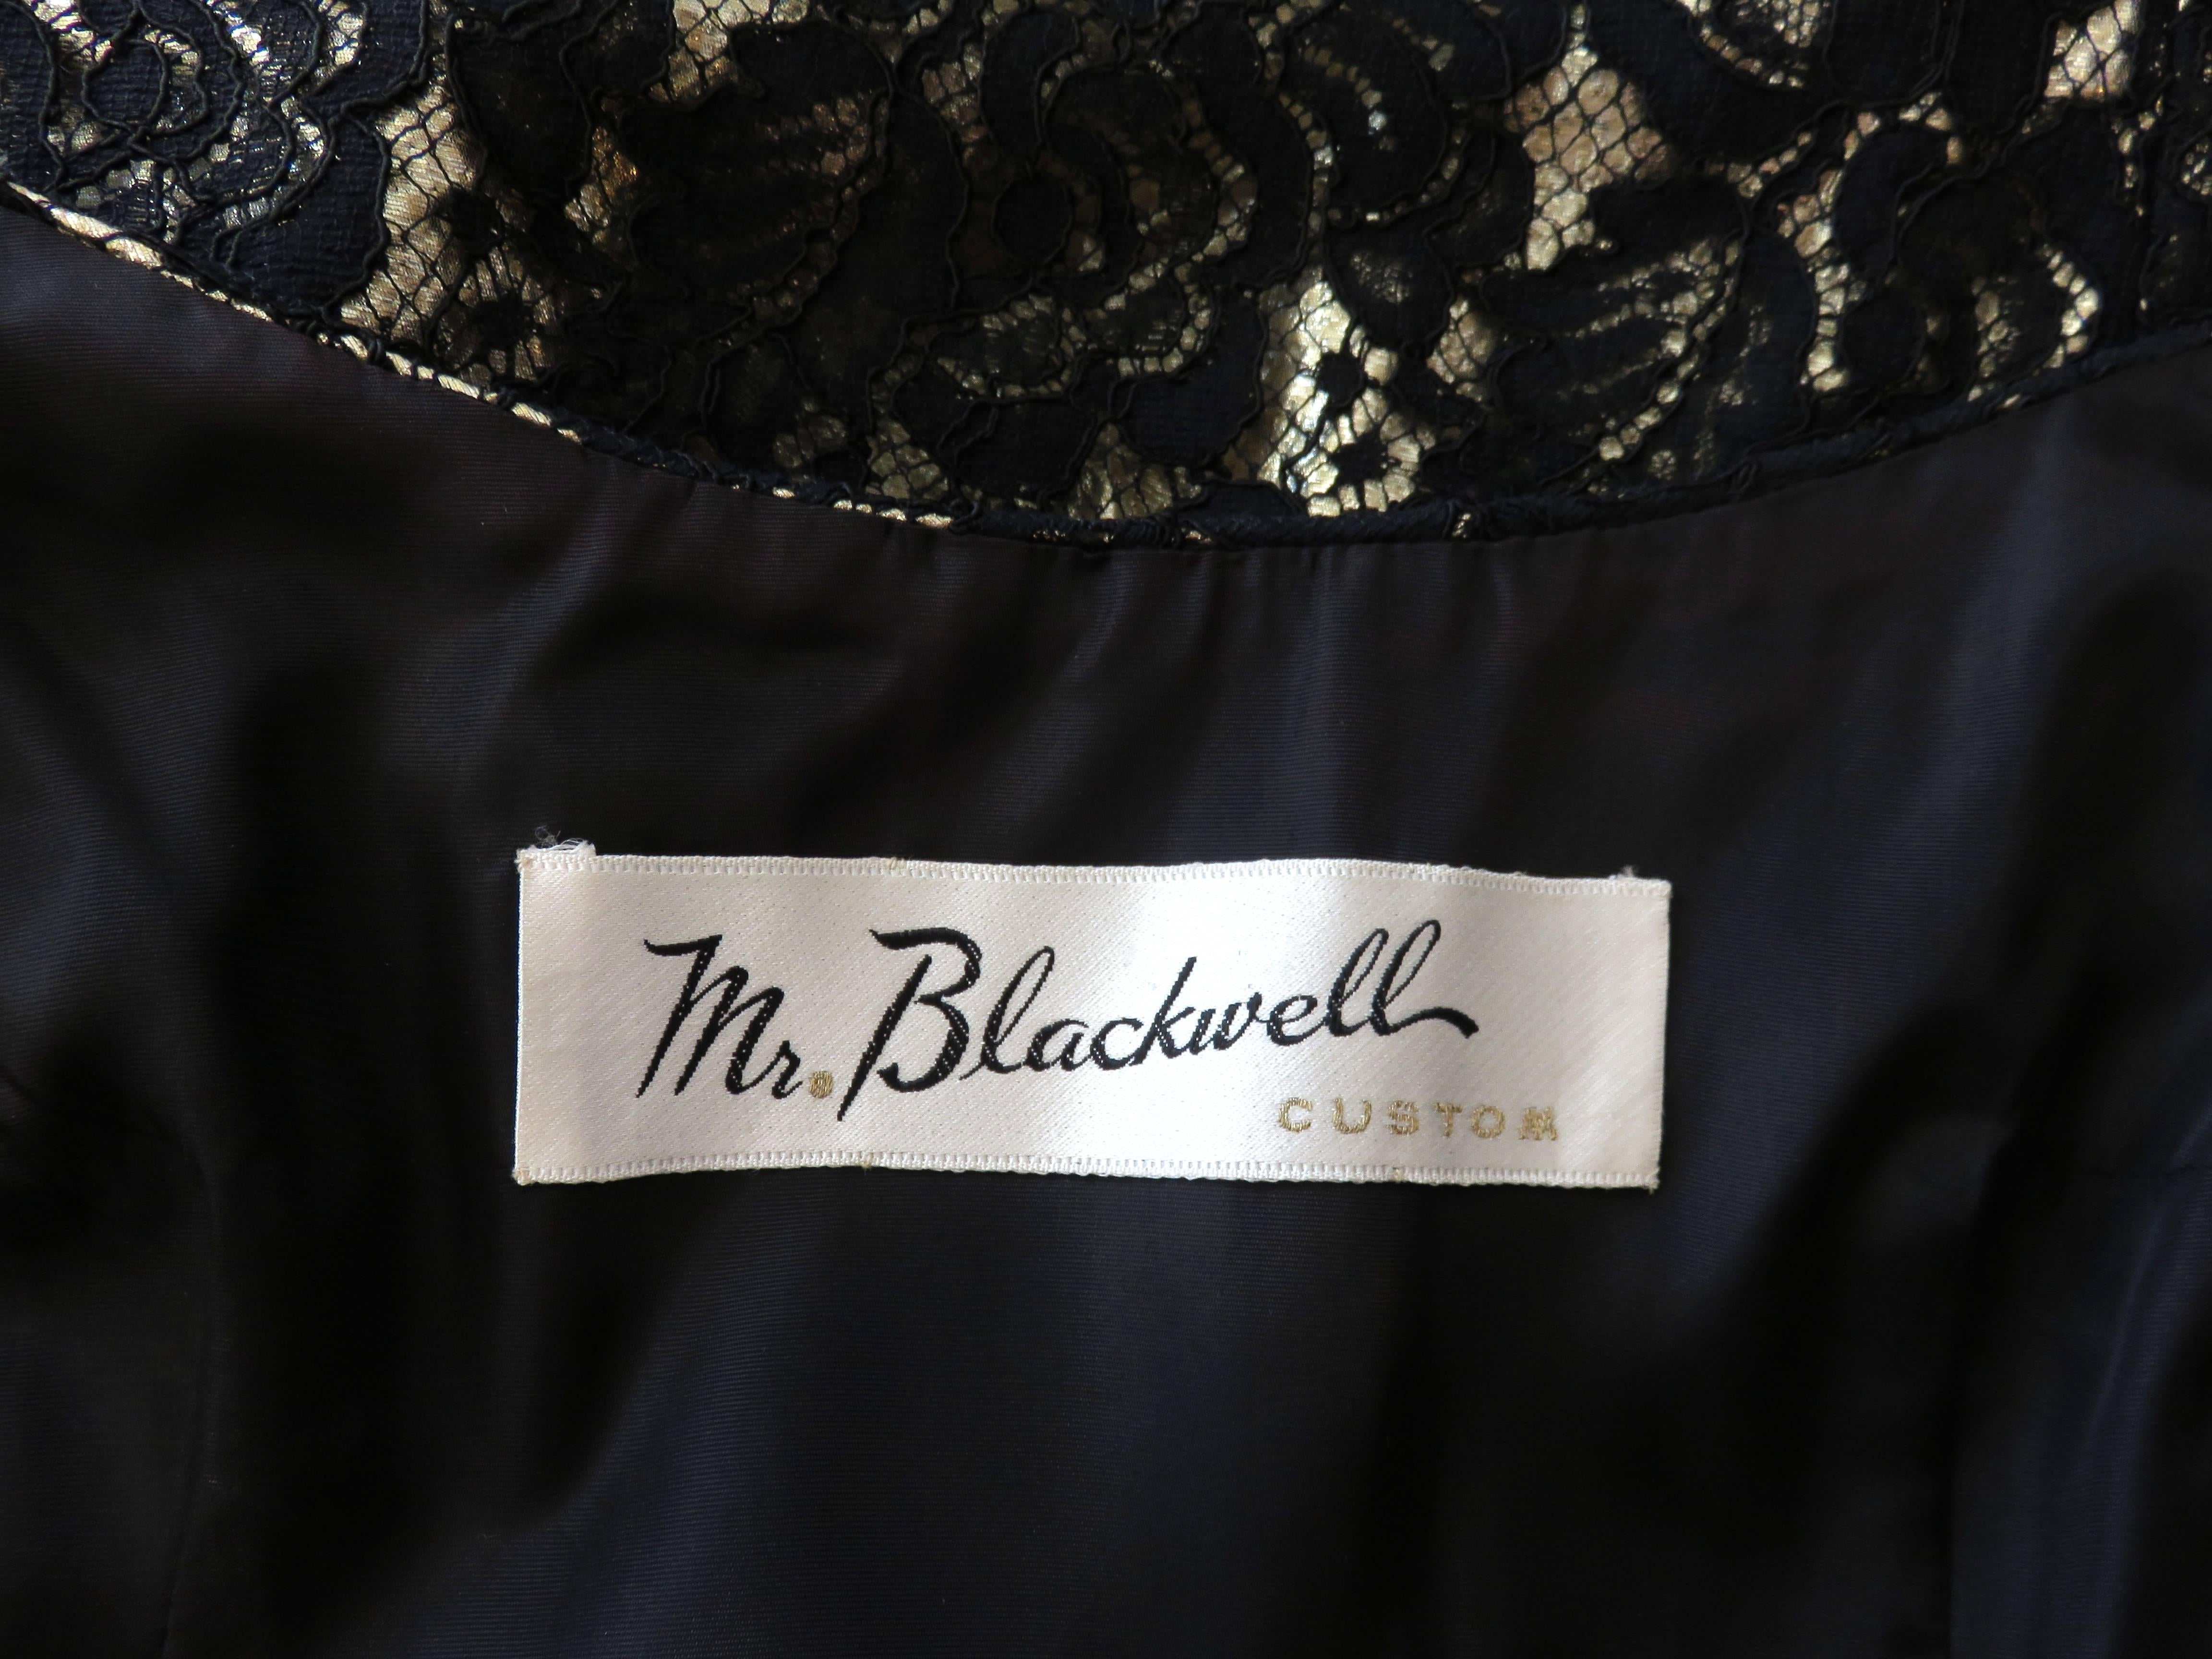 1960's MR. BLACKWELL CUSTOM Gold lame black lace overlay evening dress 2